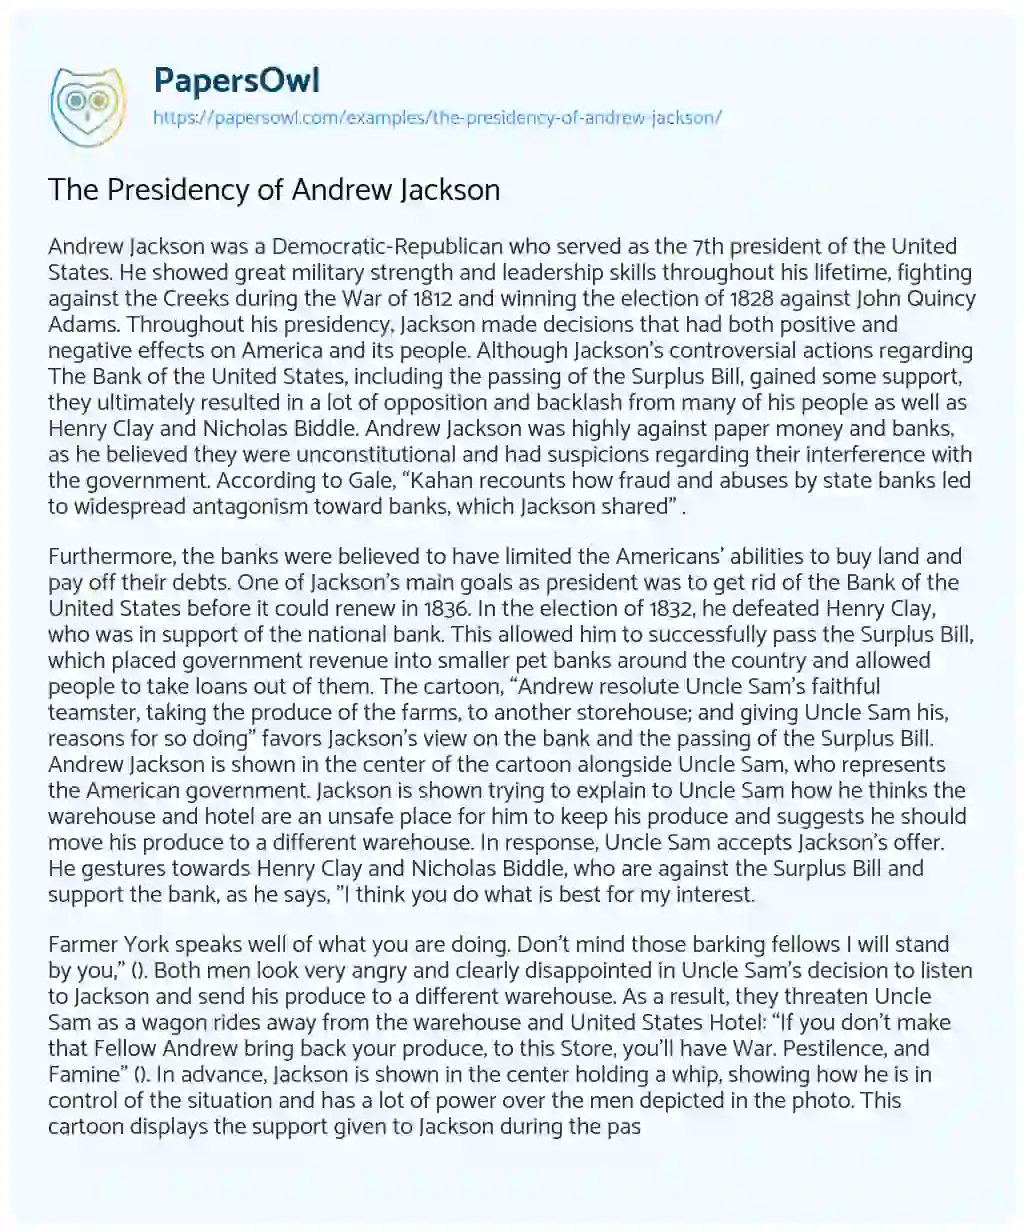 Essay on The Presidency of Andrew Jackson